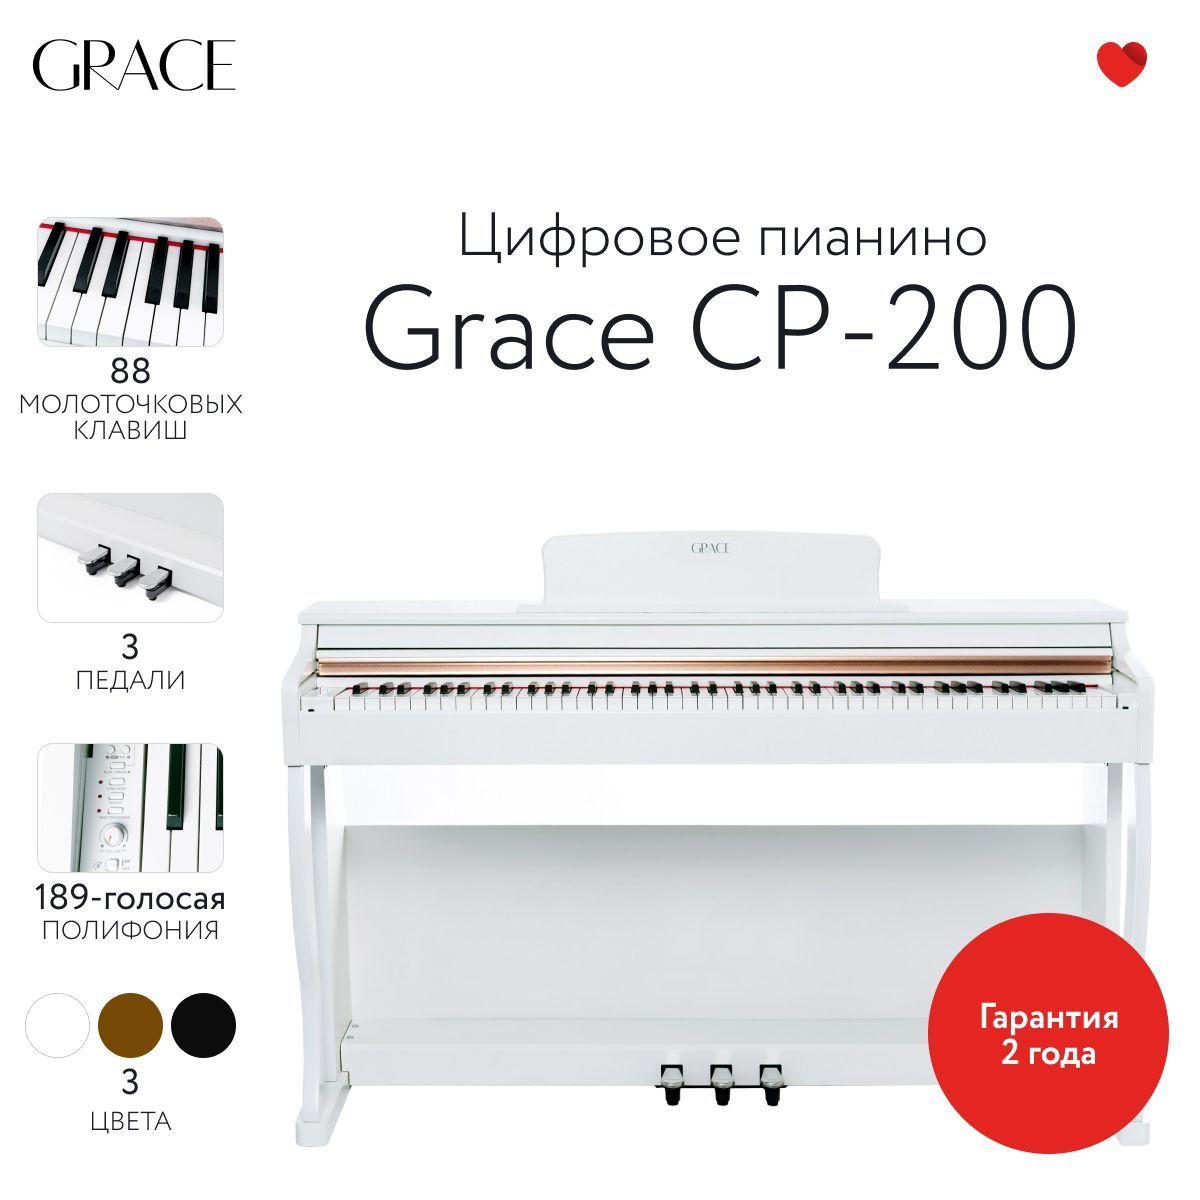 Grace CP-200 WH - Цифровое пианино в корпусе с тремя педалями, наушники в подарок